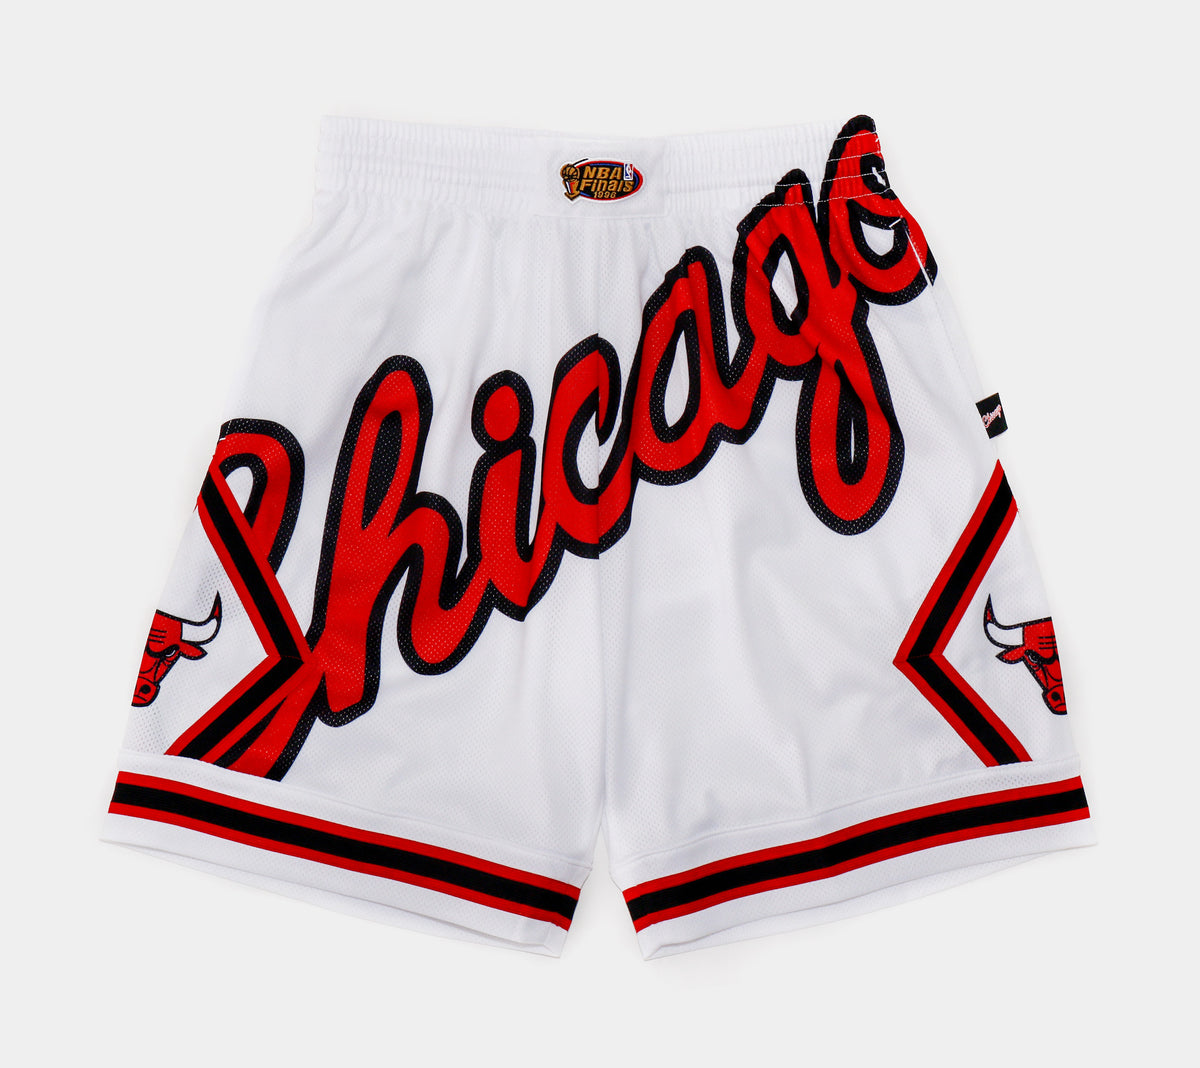 Chicago Bulls Black Basketball Shorts